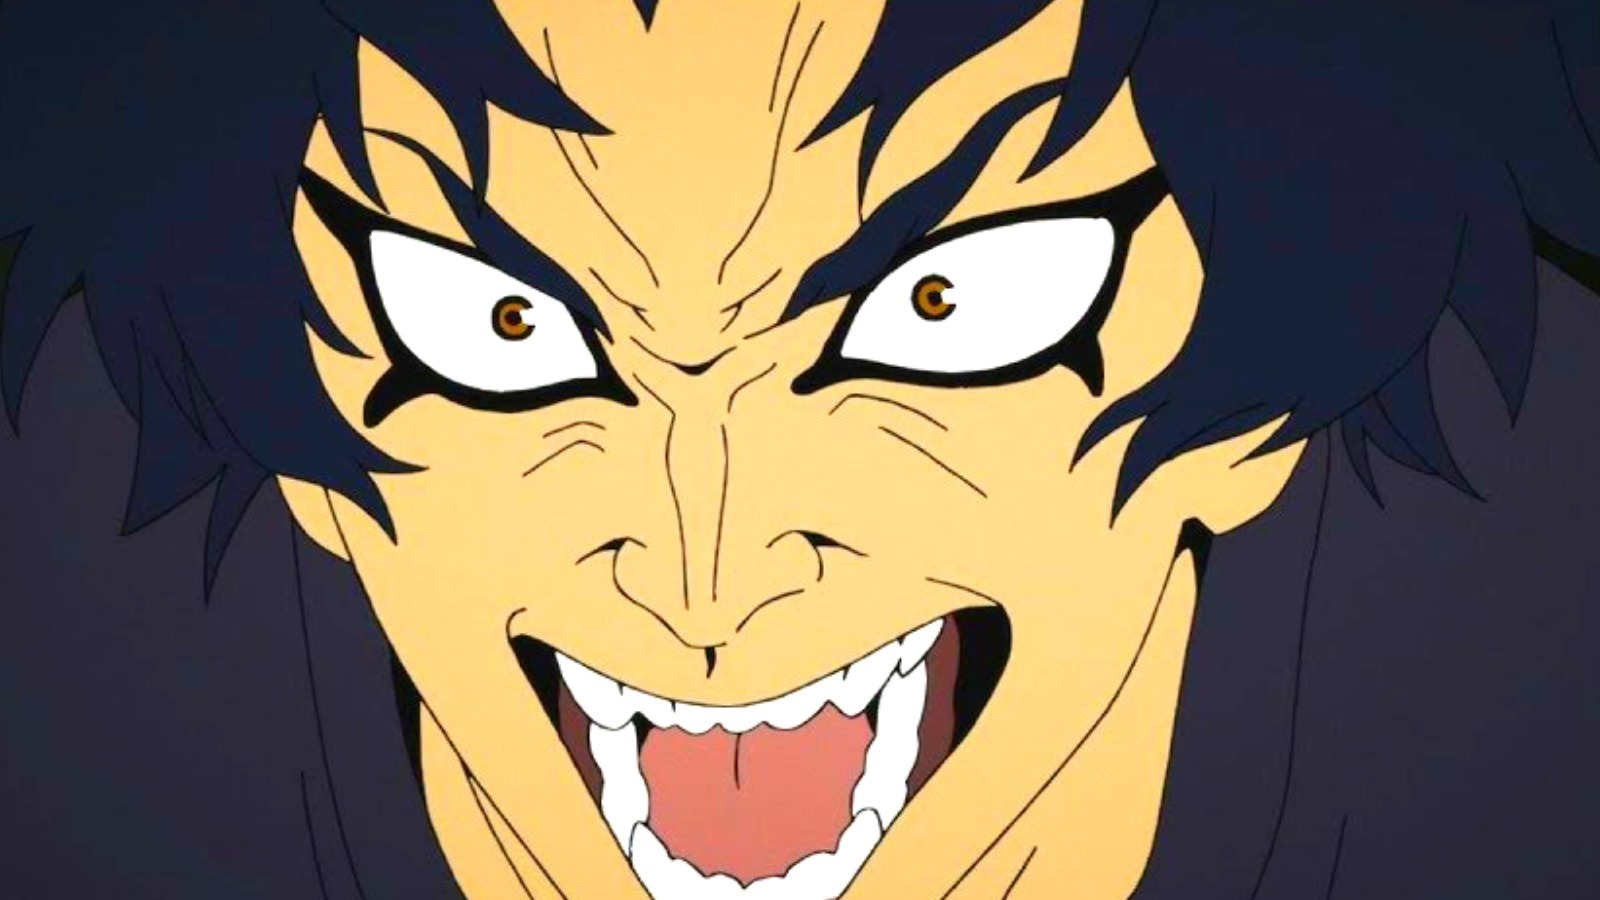 Blusa Moletom - Anime Devilman Crybaby | Elo7 Produtos Especiais-demhanvico.com.vn